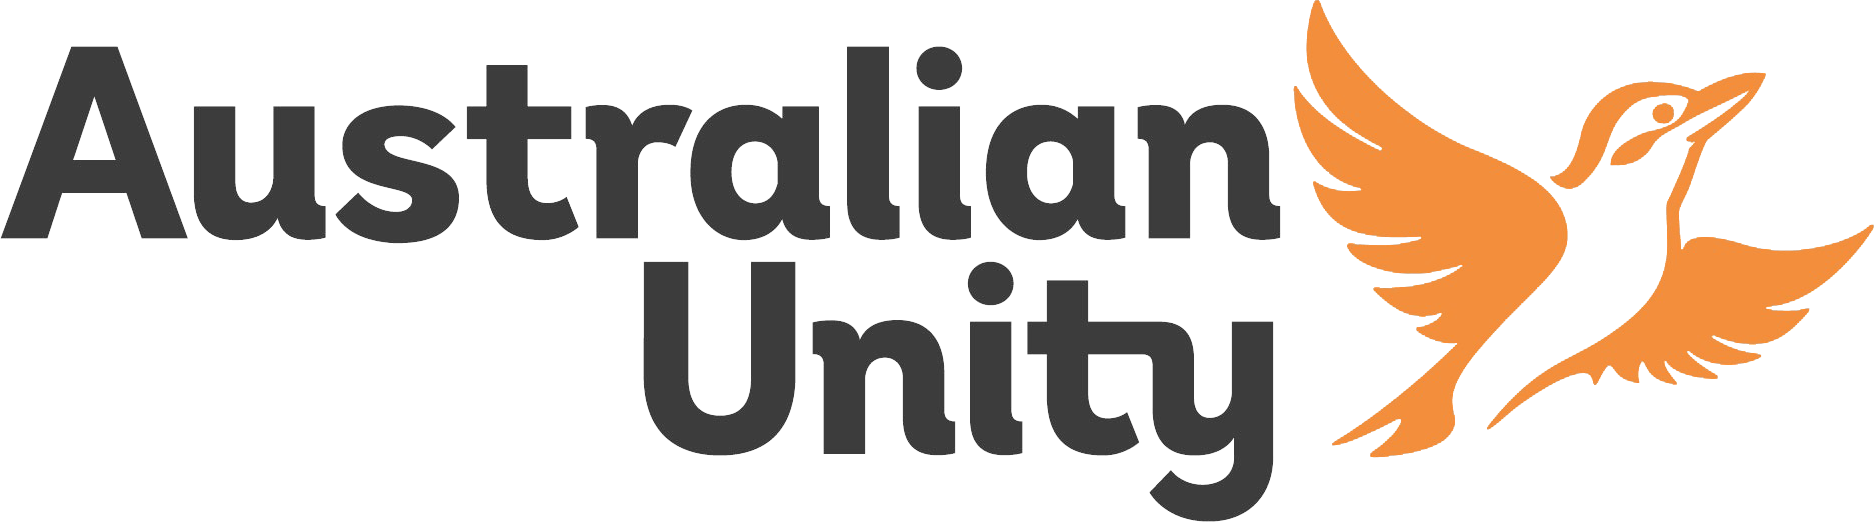 Australian Unity Office Fund Logo